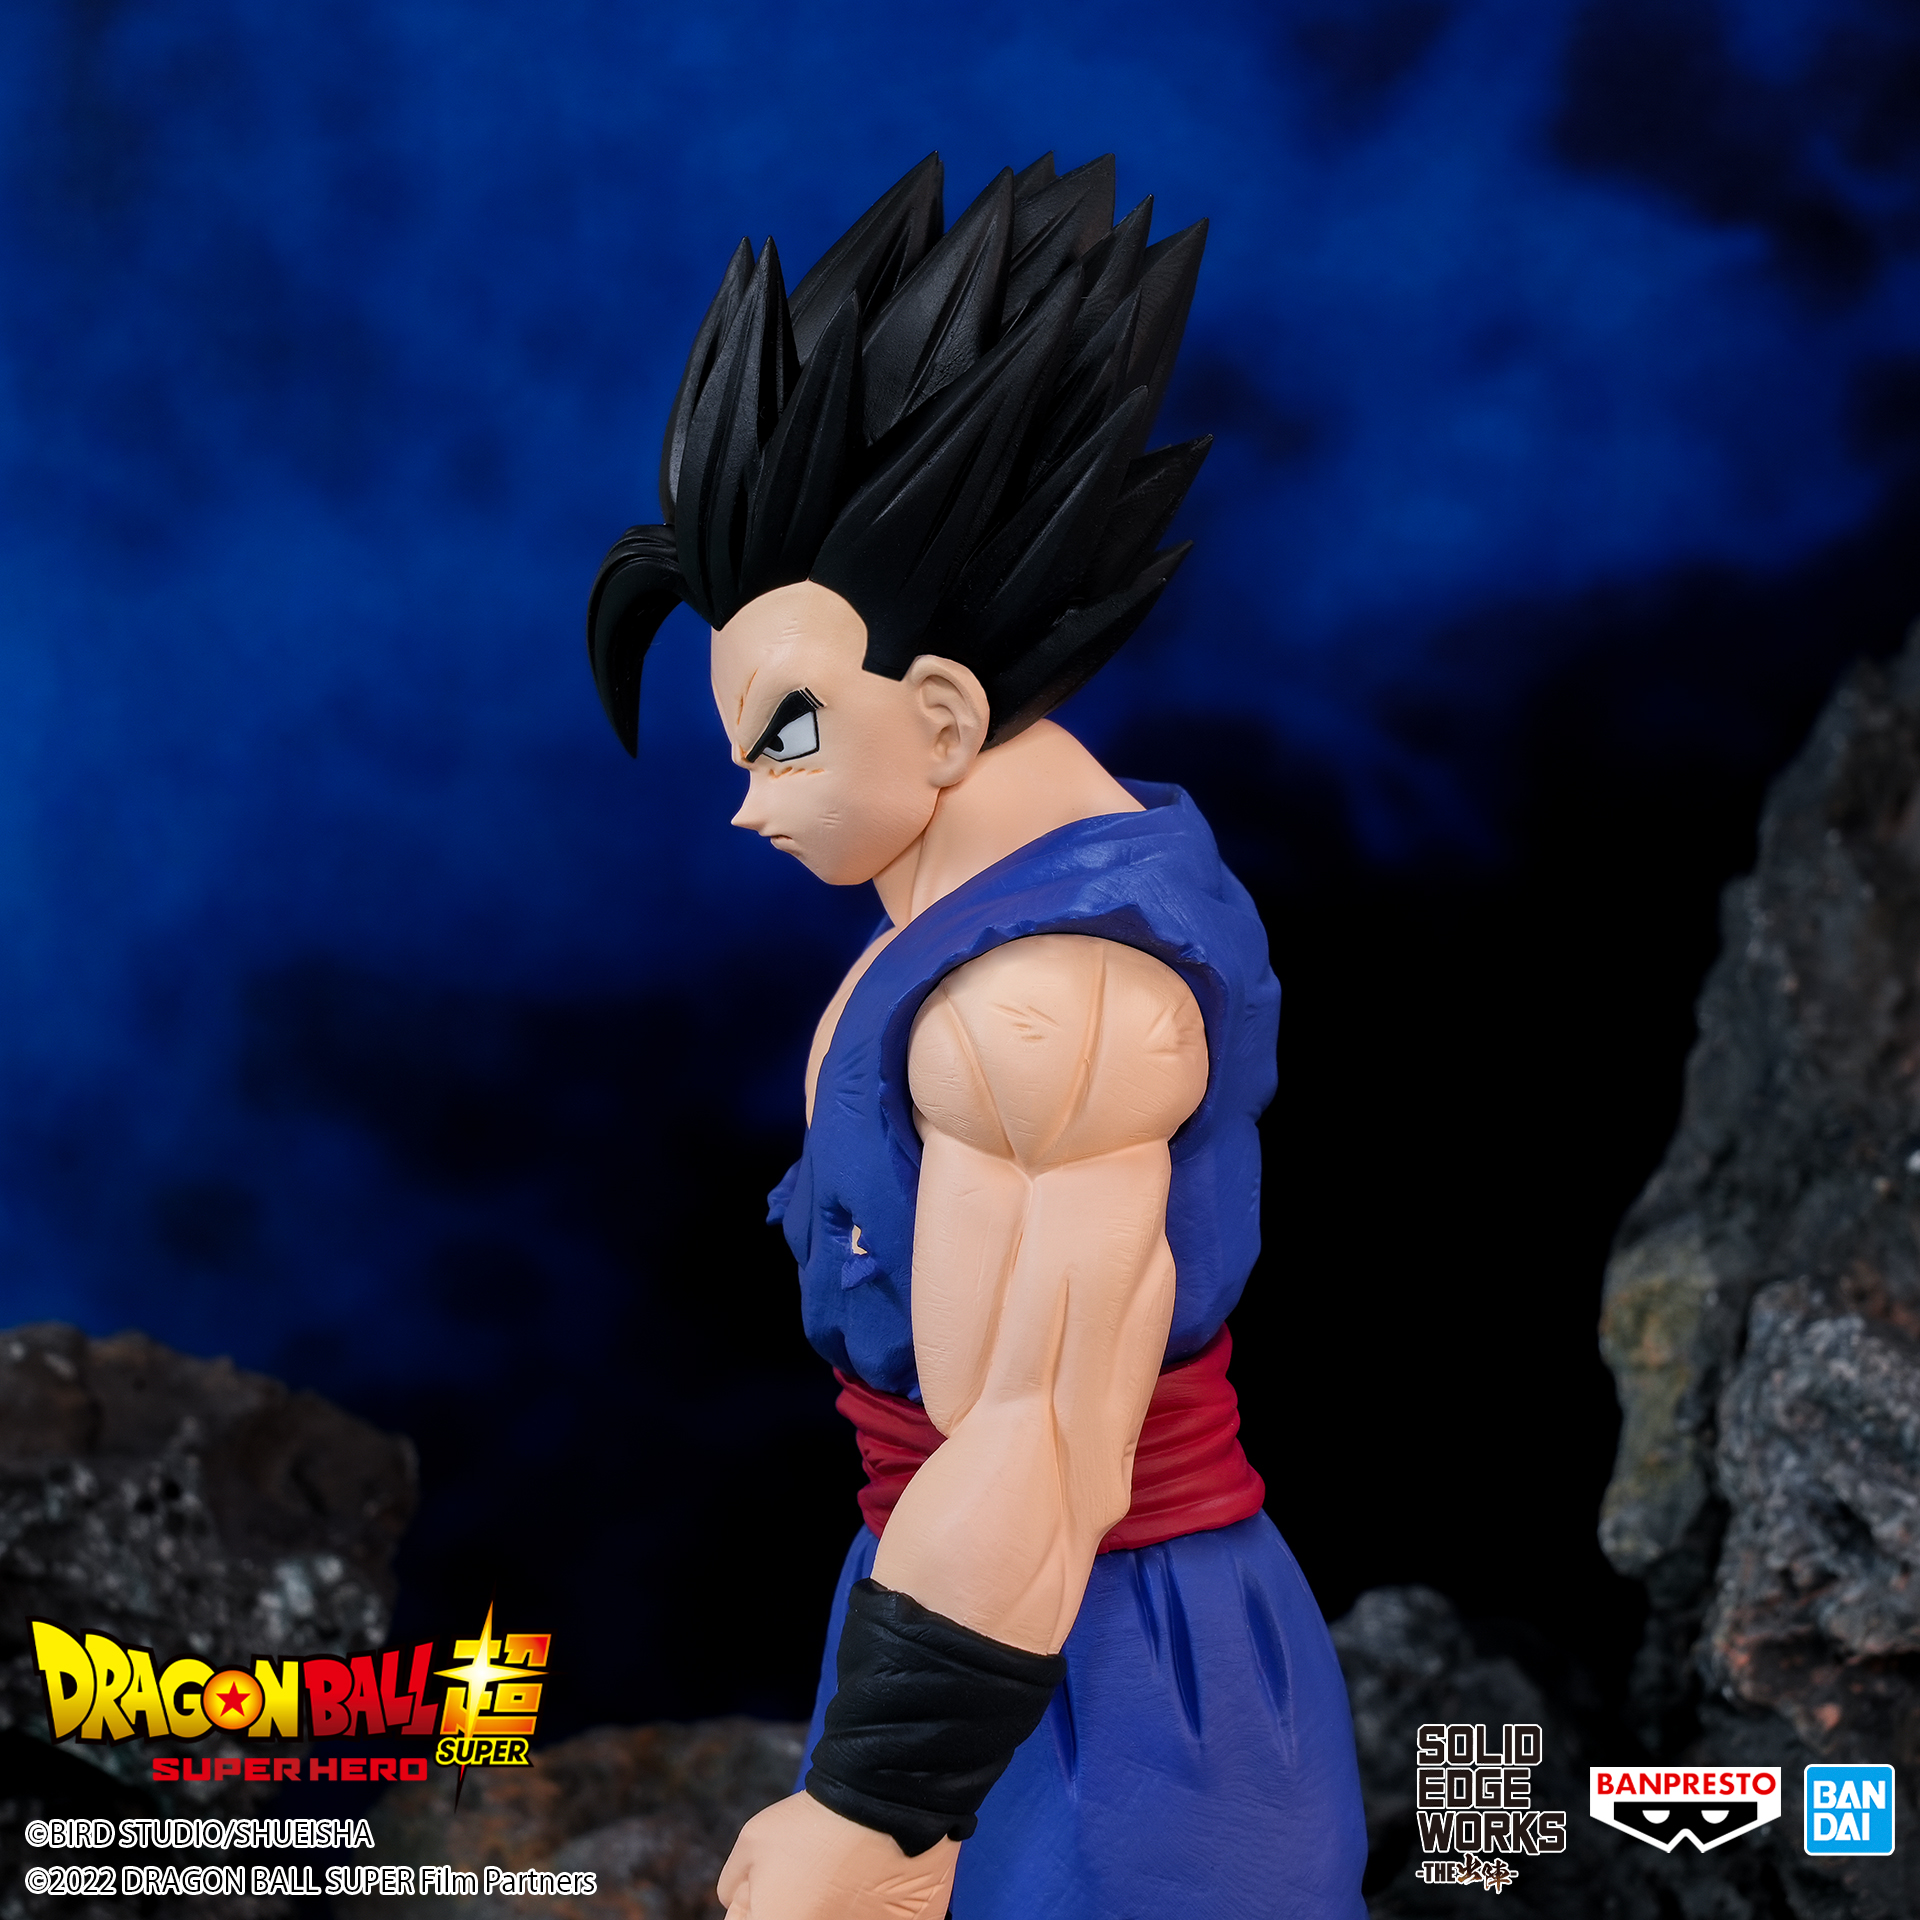 Dragonball Super Super Hero 6 Inch Action Figure - Goku Movie Version